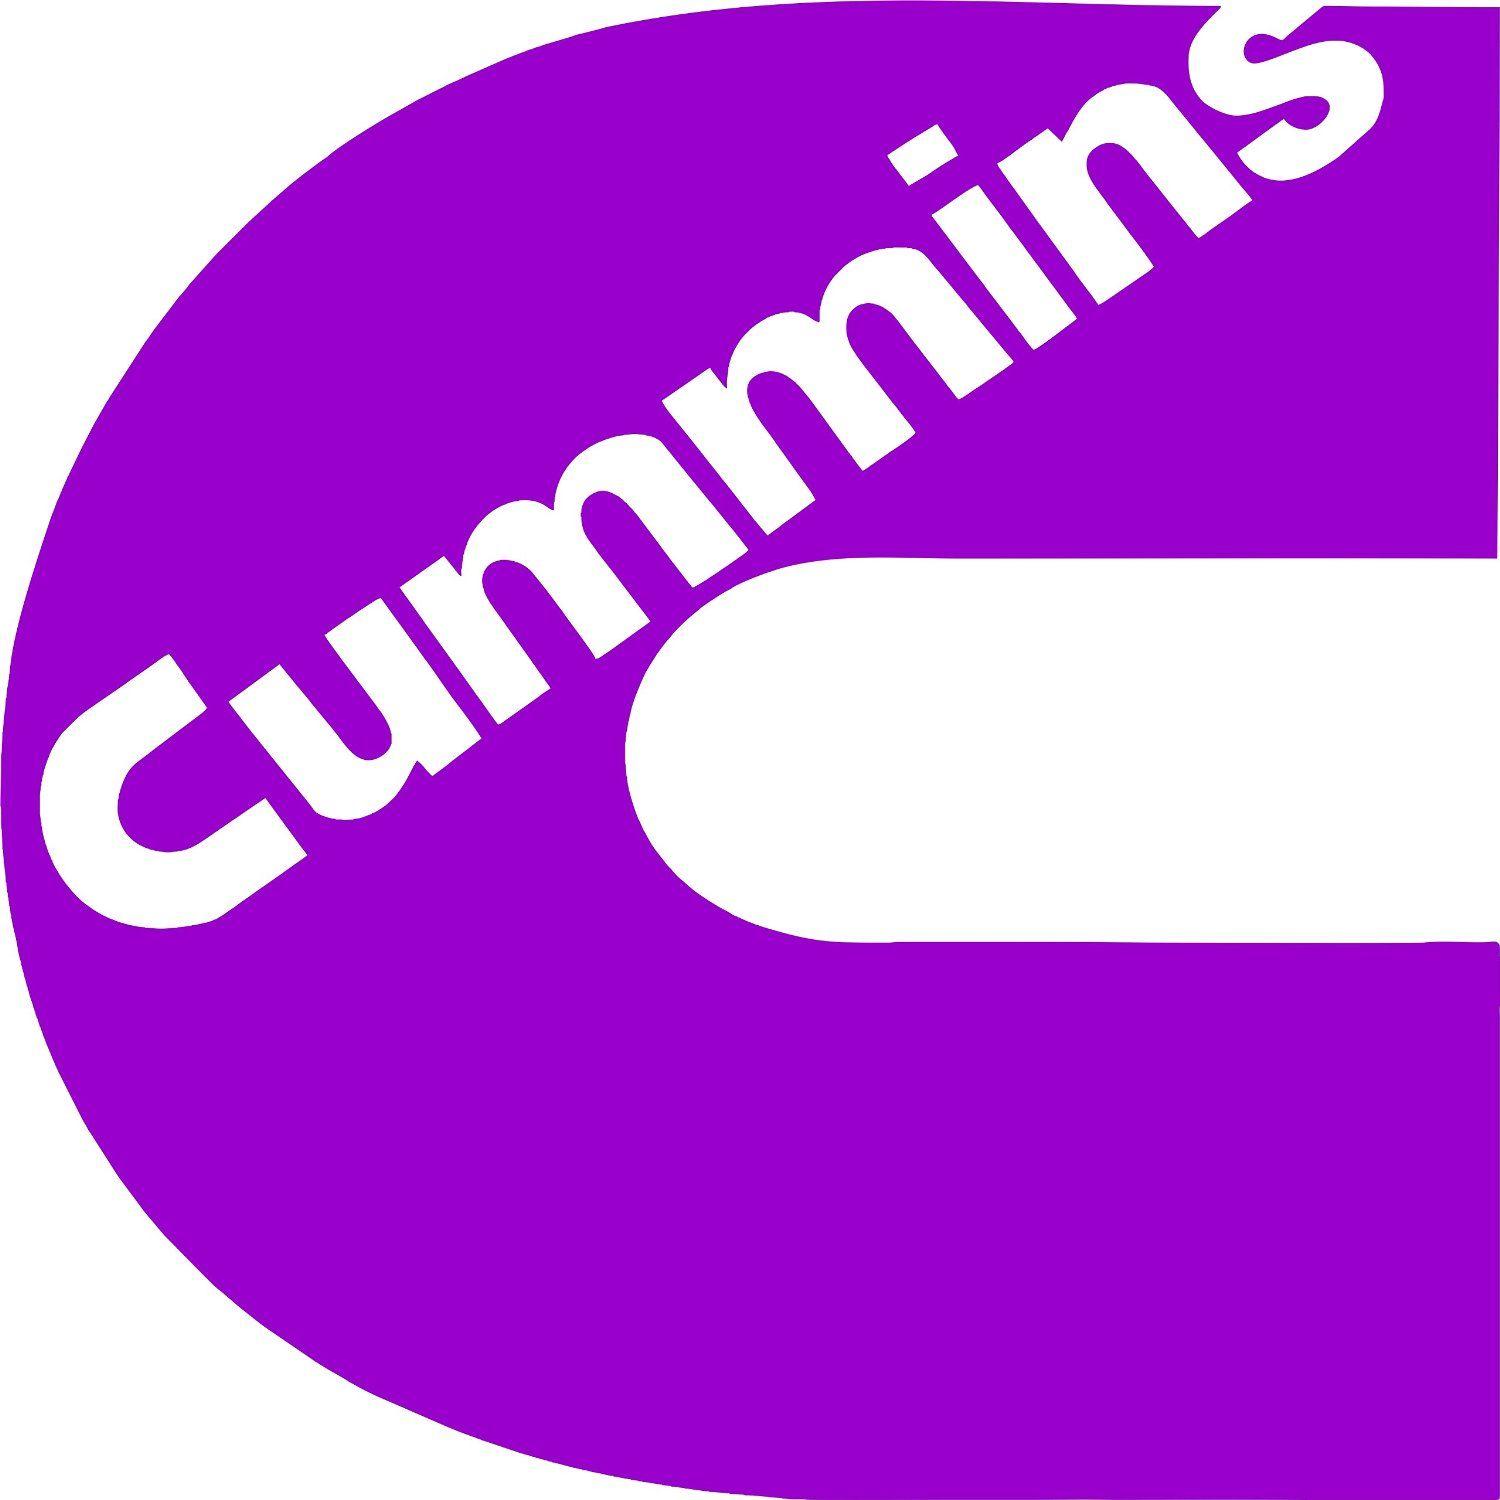 Cummins C Logo - Cheap Cummins C Logo, find Cummins C Logo deals on line at Alibaba.com